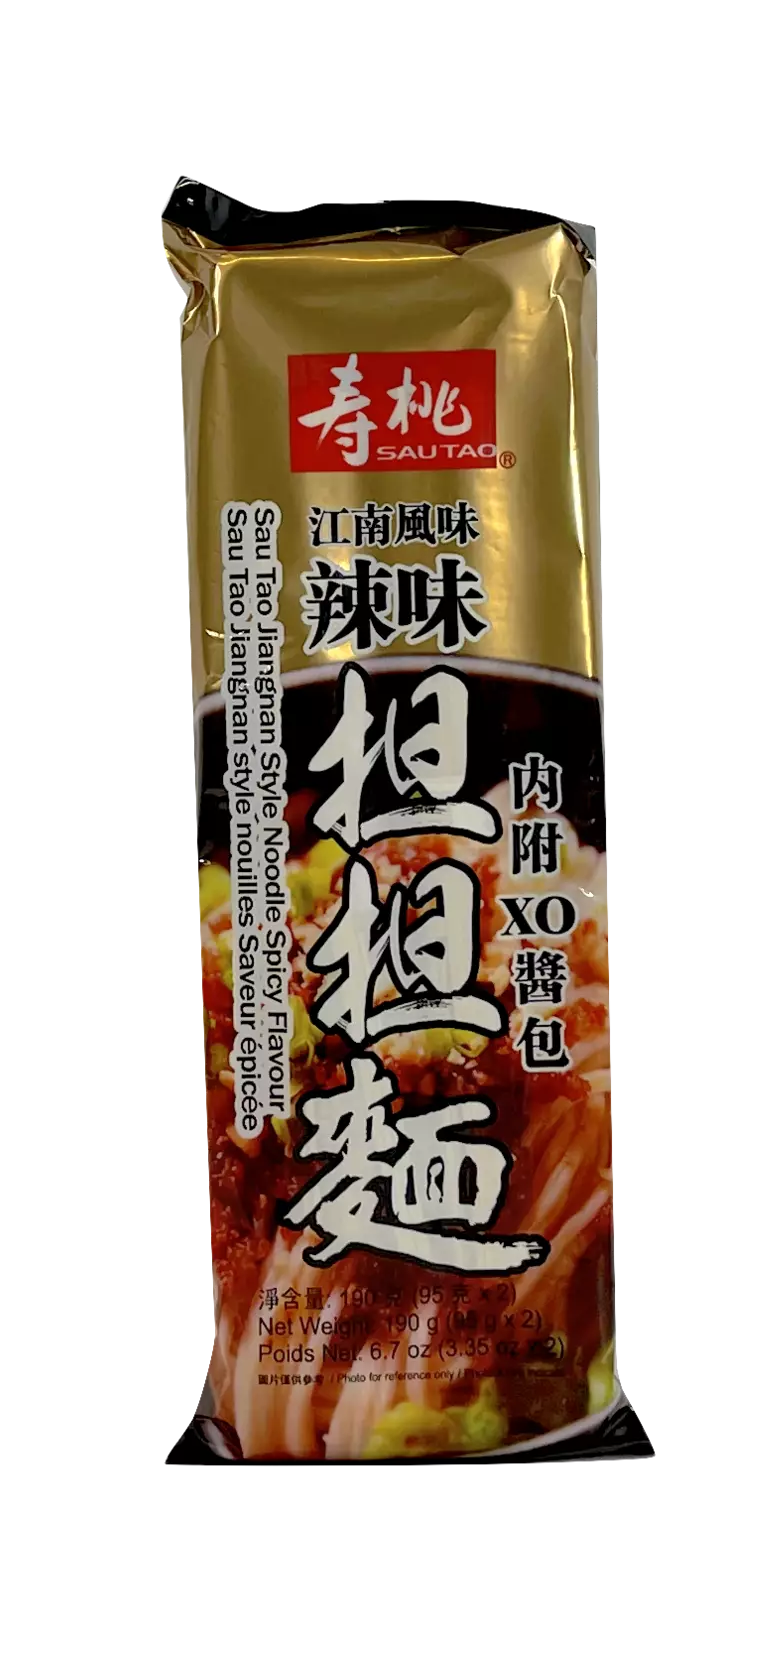 Nudlar Spicy Jiangnan Style Med XO Sås 190g Sautao Kina